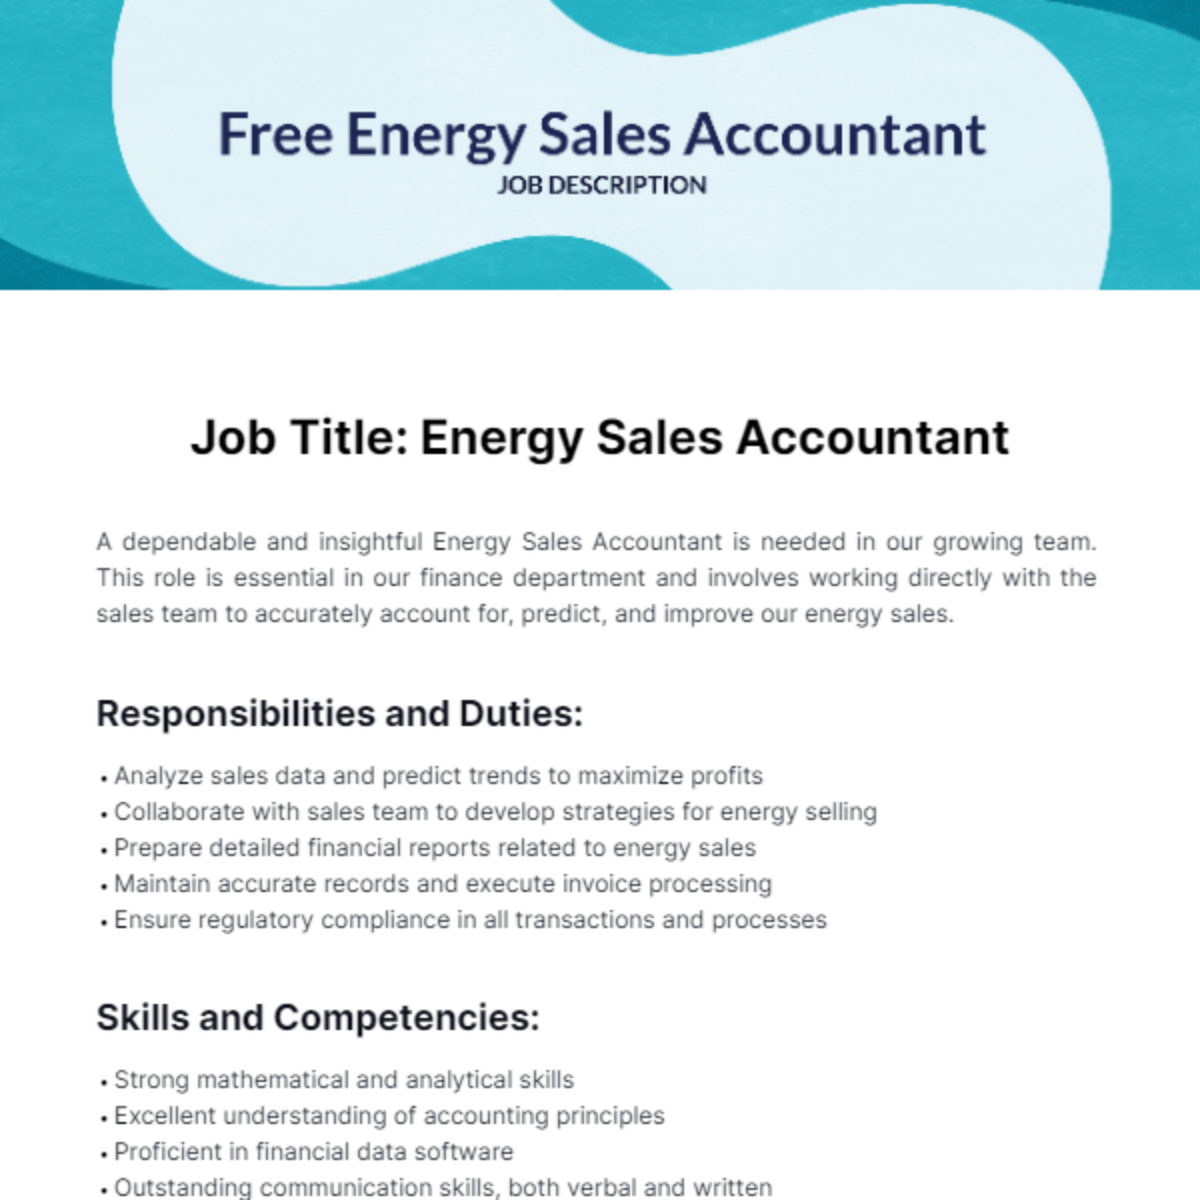 Free Energy Sales Accountant Job Description Template